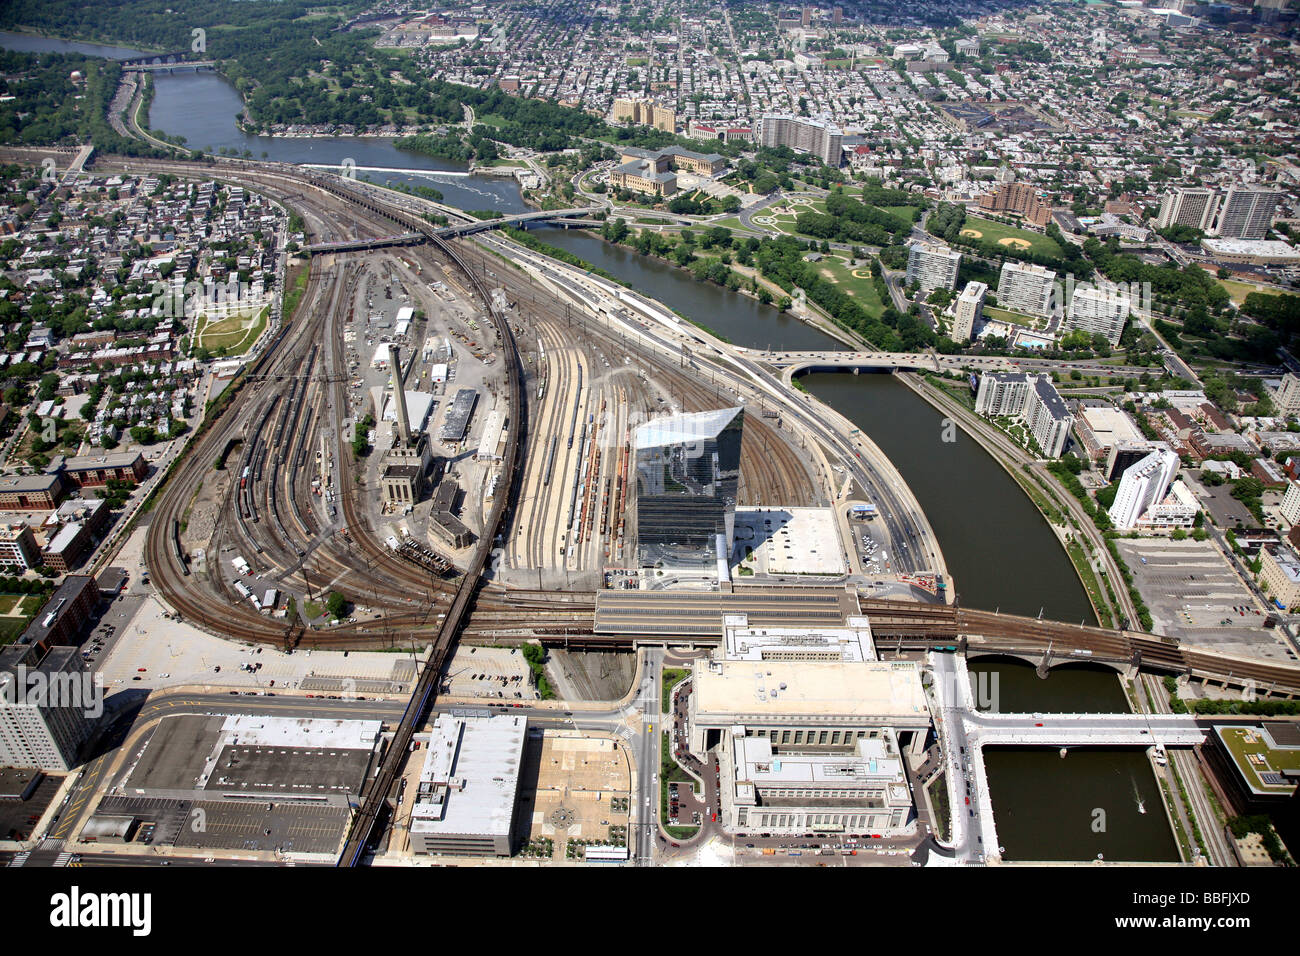 Aerial view of railroad tracks and train station near Philadelphia, Pennsylvania, U.S.A. Stock Photo